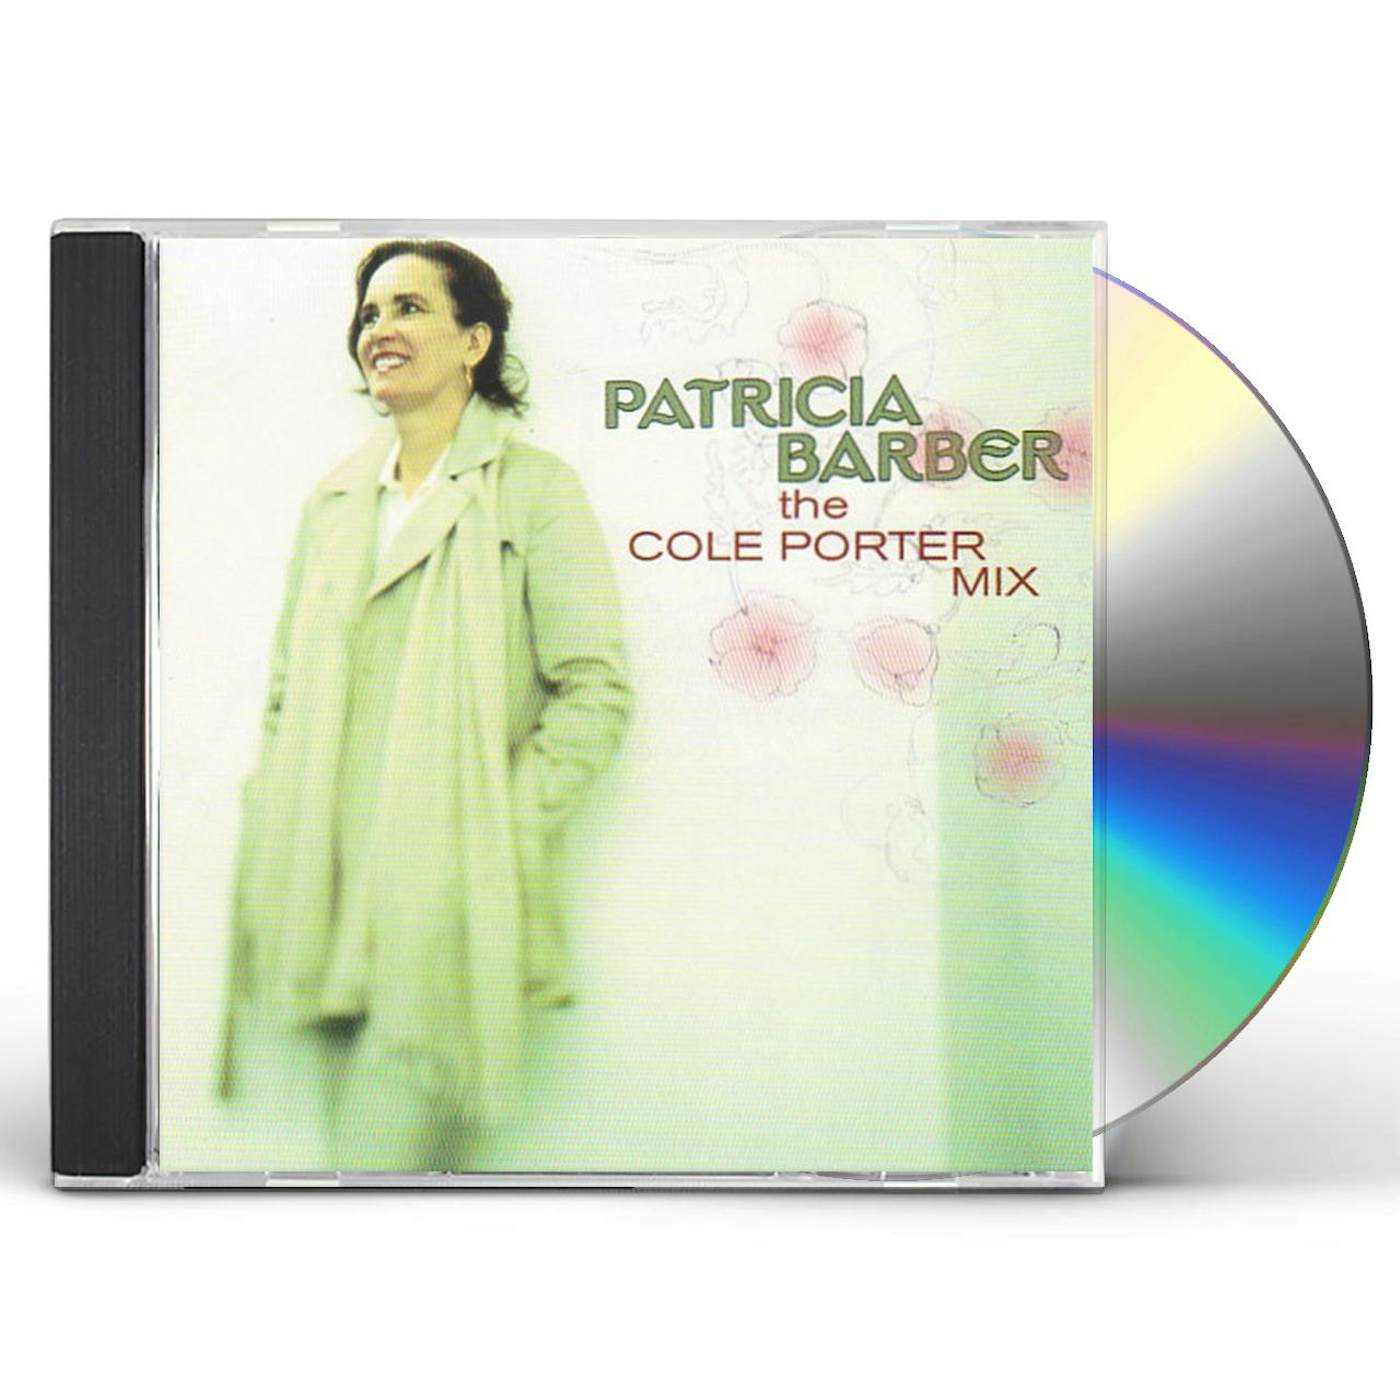 Patricia Barber COLE PORTER MIX CD